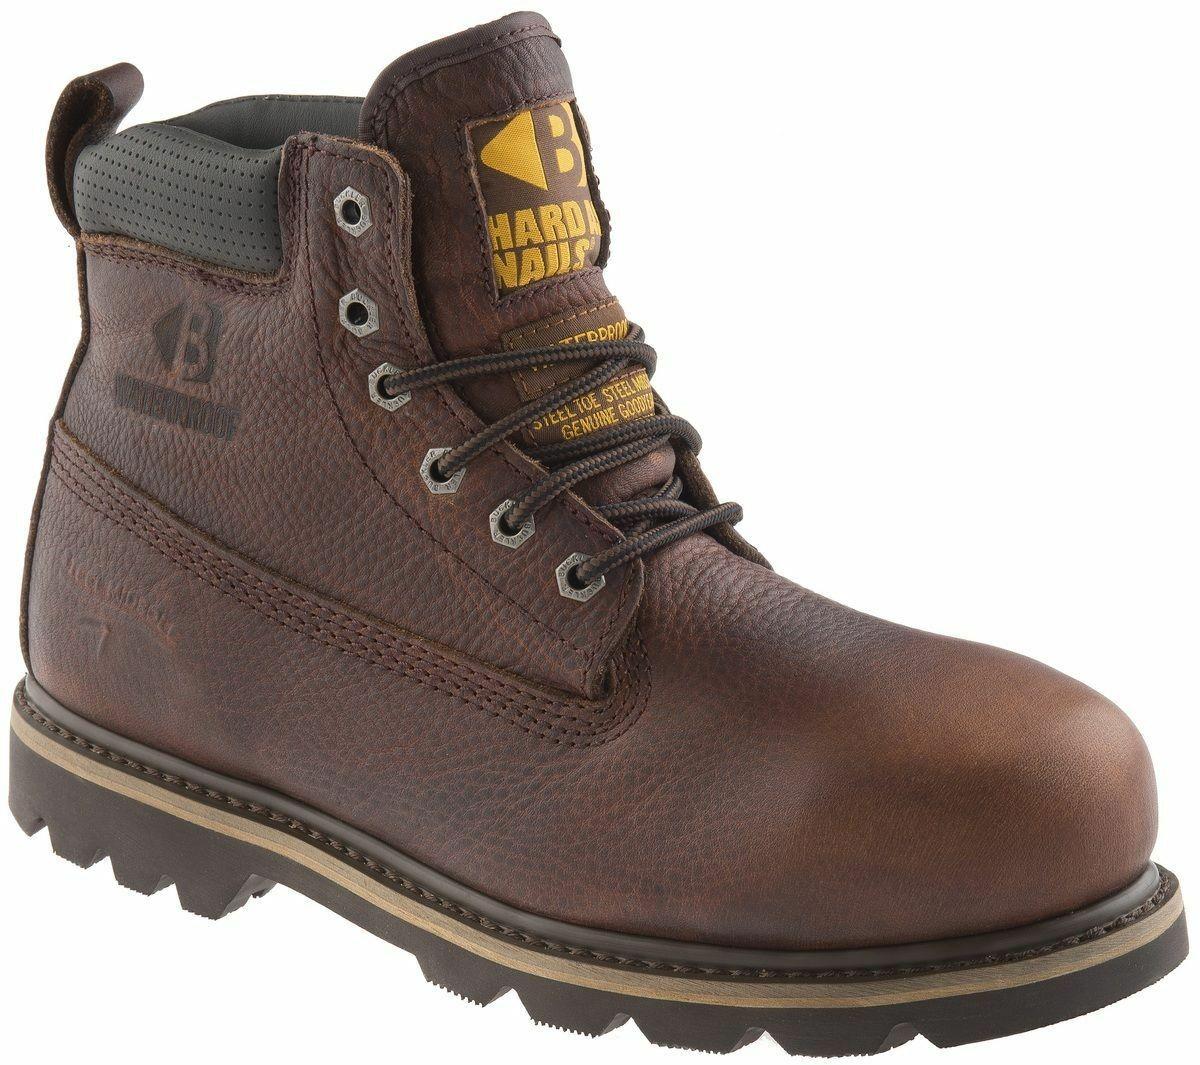 Buckbootz SBP brown waterproof leather steel toe/midsole safety work boot #B750SMWP